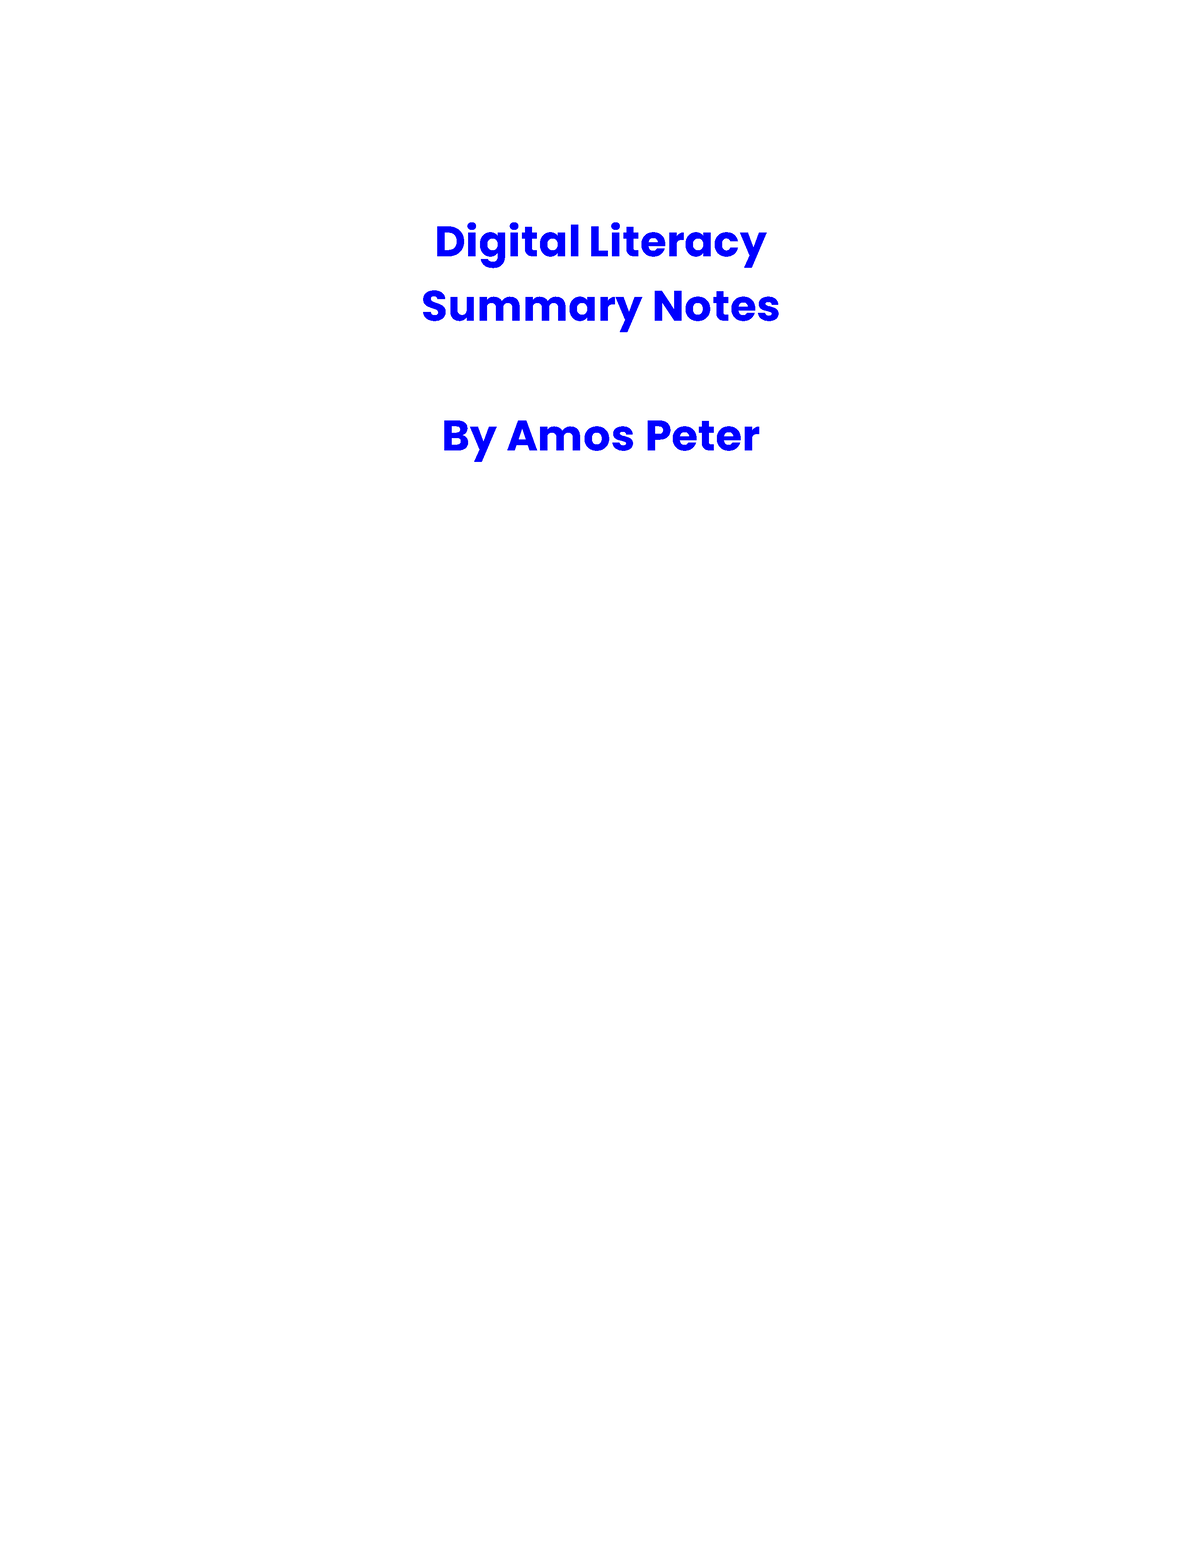 Digital Literacy Summary Notes - Digital Literacy Summary Notes By Amos ...